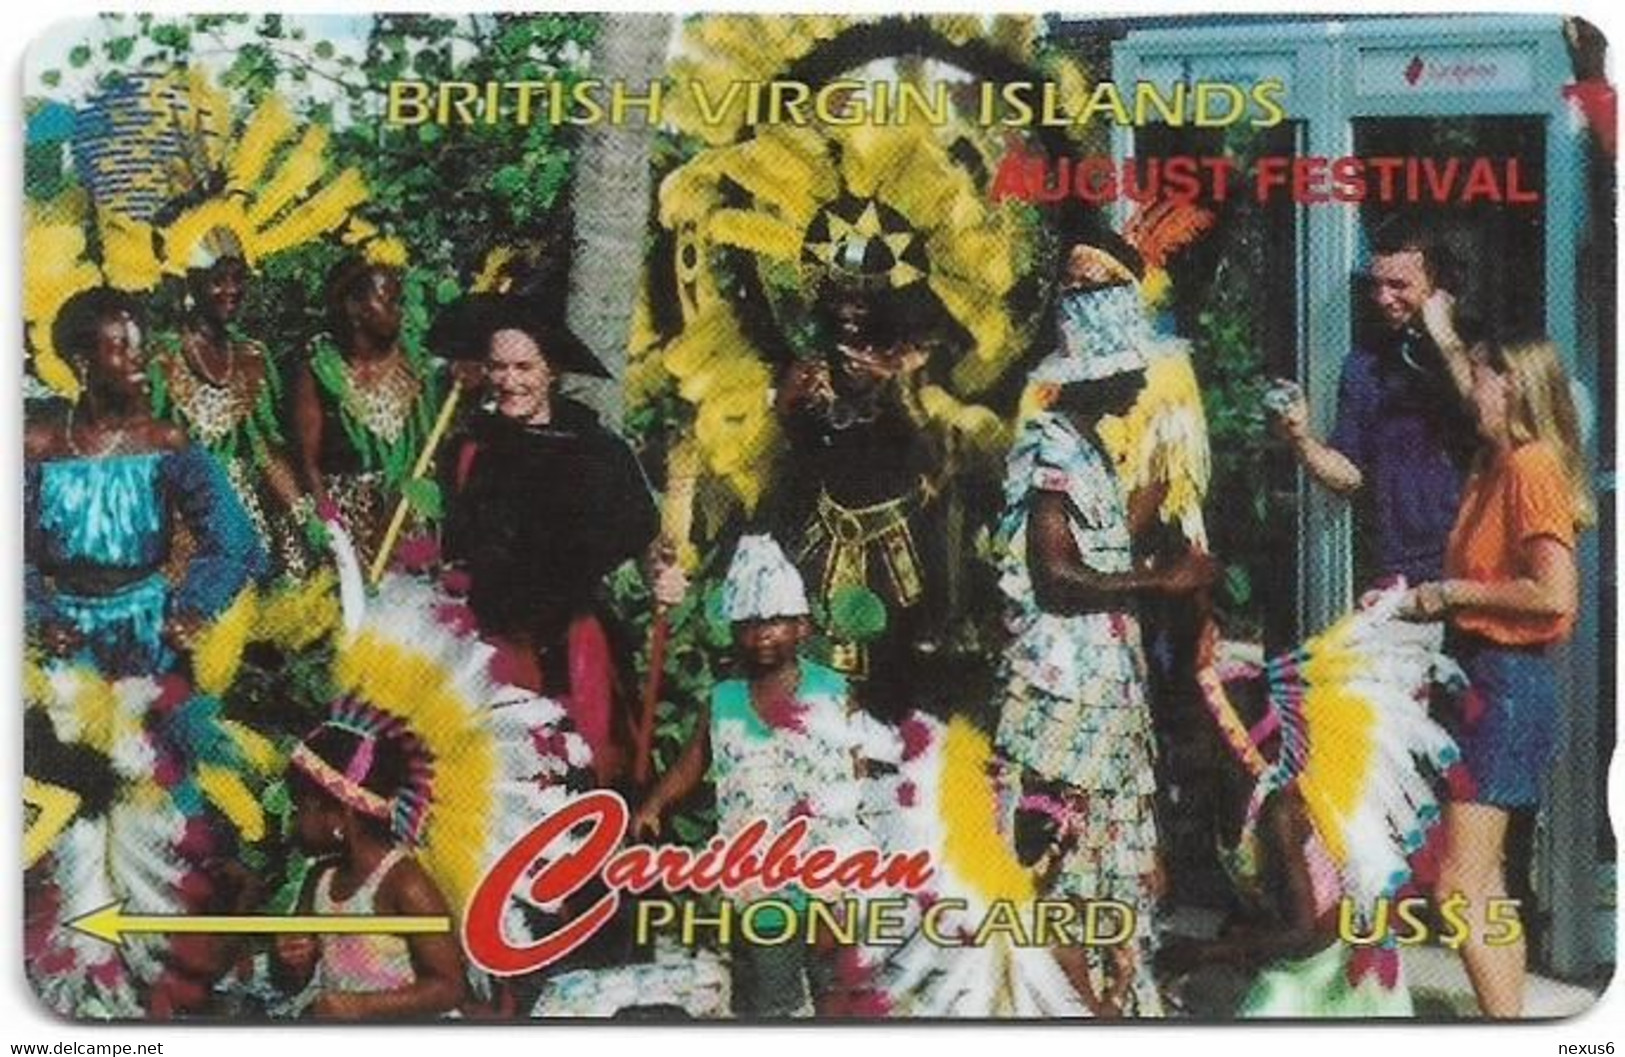 British Virgin Islands - C&W (GPT) - August Festival, 103CBVH, 1997, 17.500ex, Used - Jungferninseln (Virgin I.)